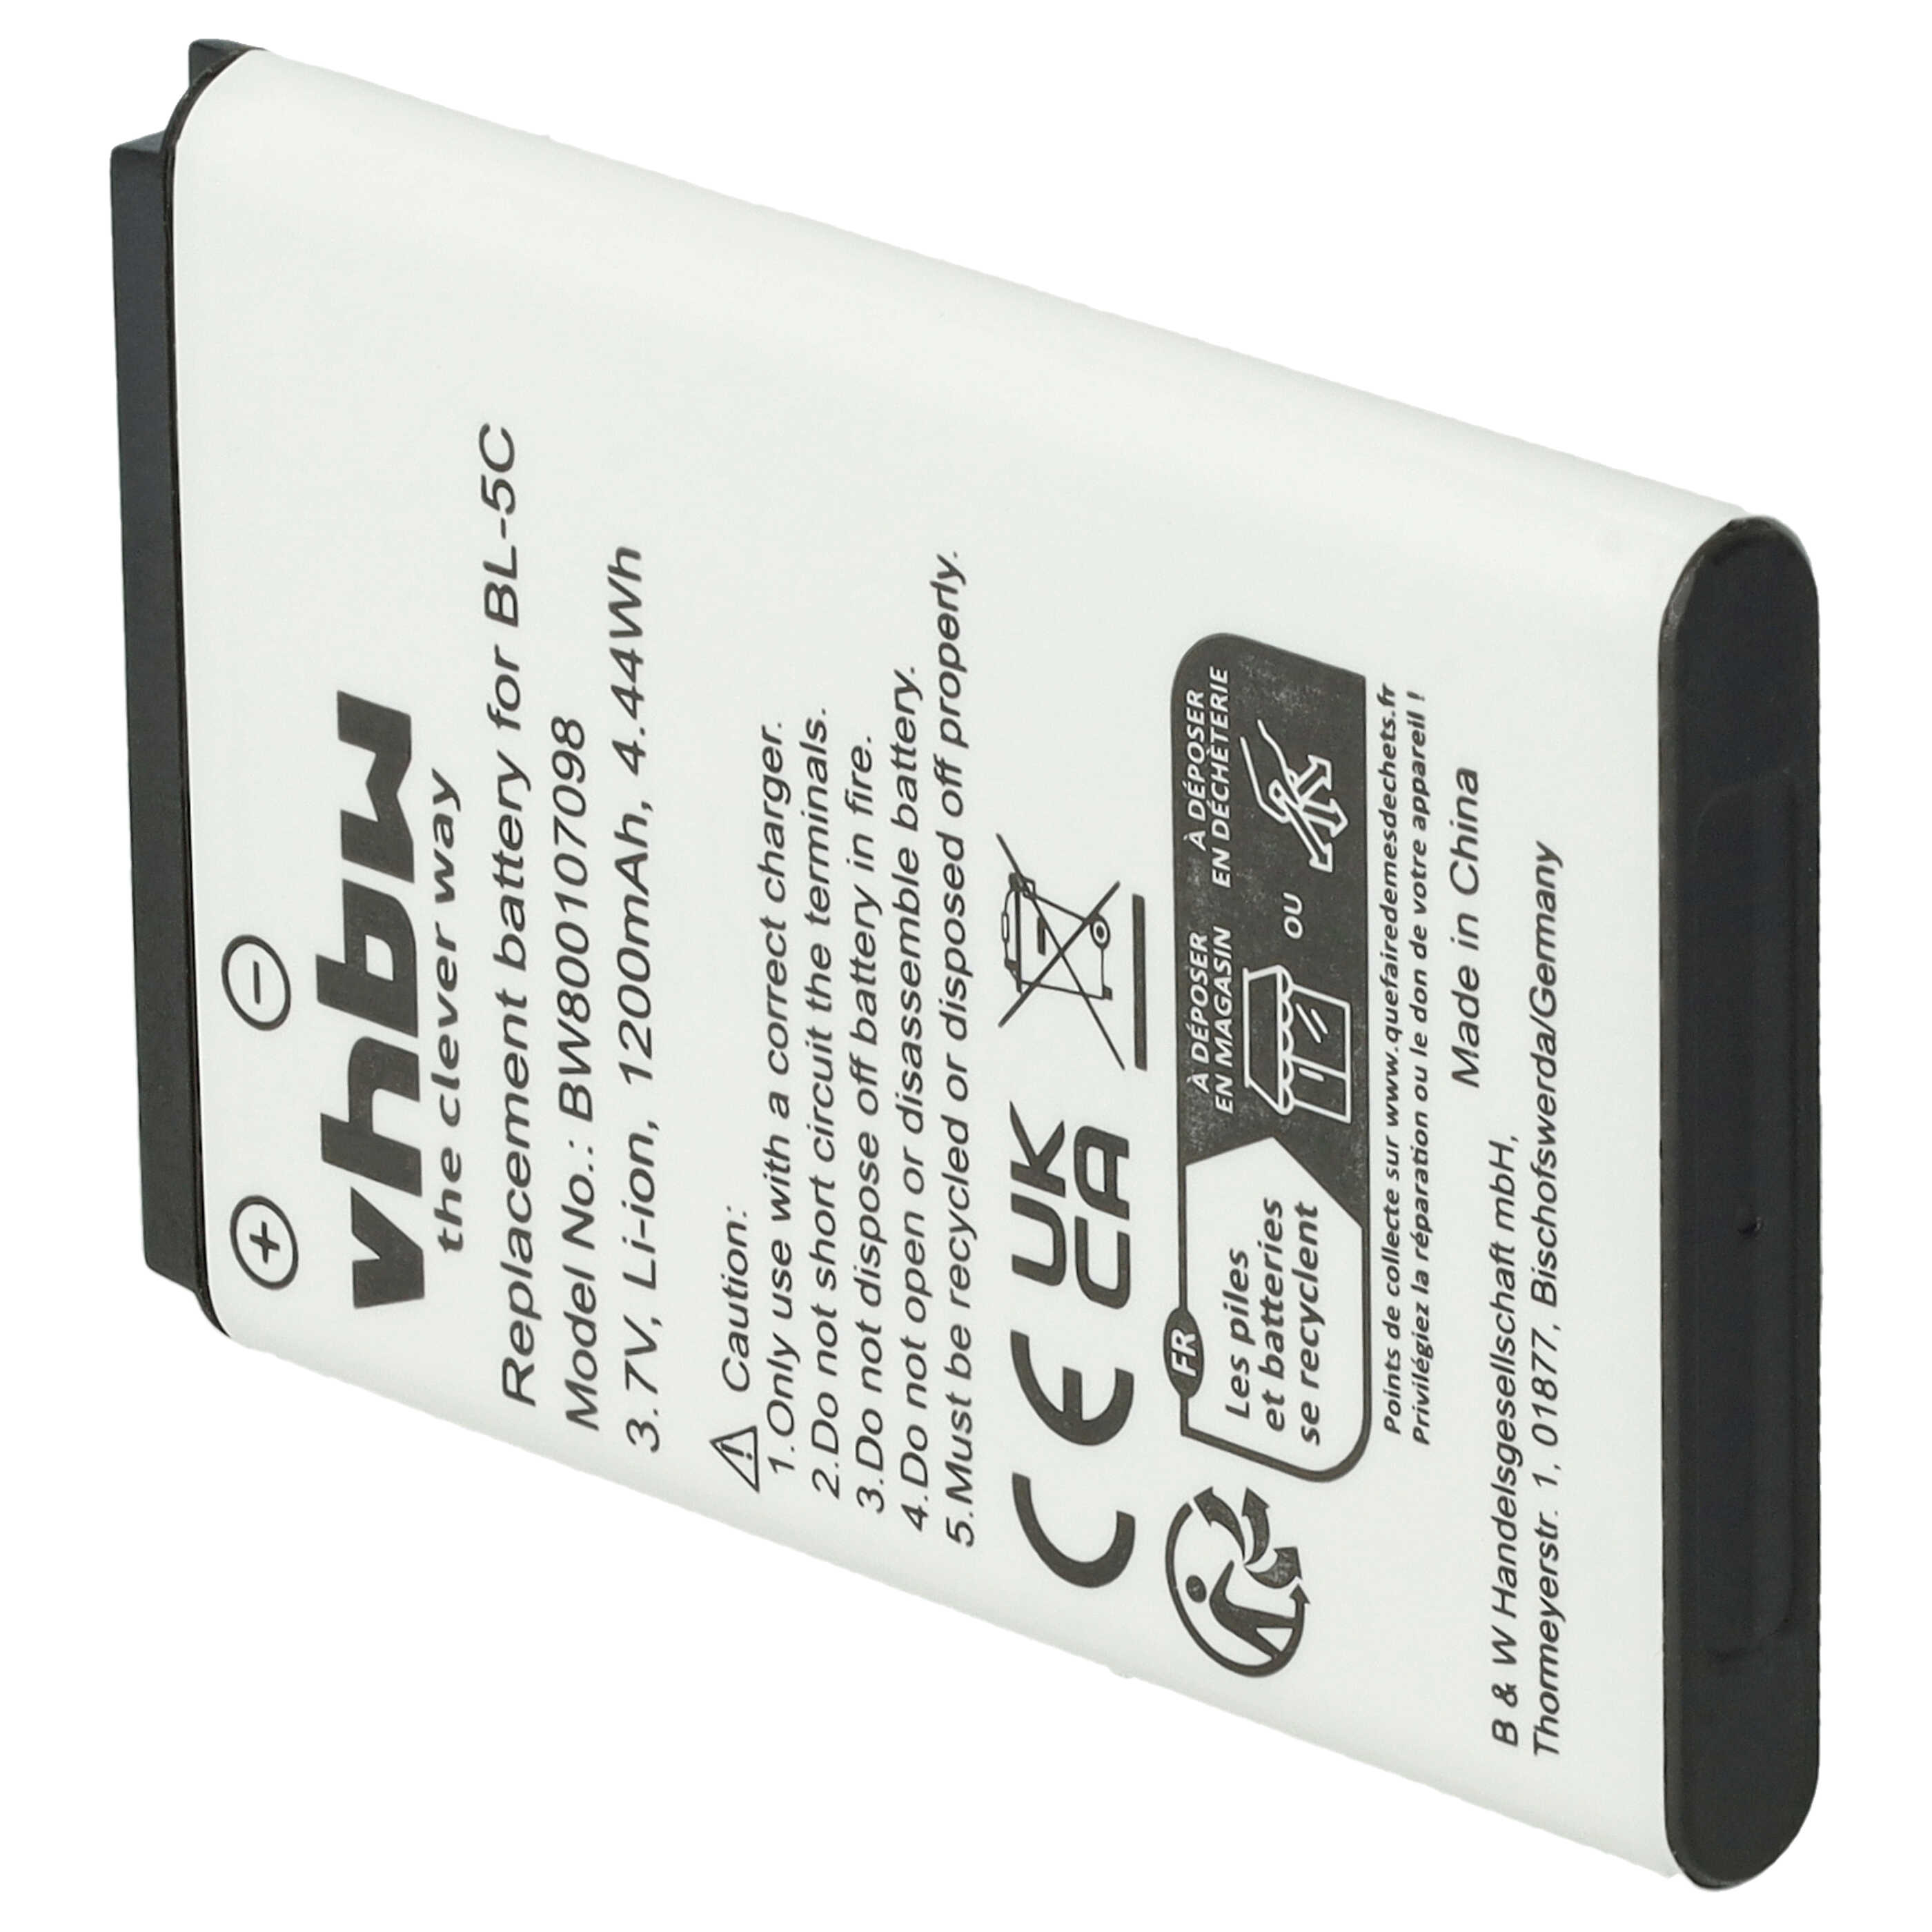 Batería reemplaza Alcatel RTR001F01 para teléfono fijo T-Com - 1200 mAh 3,7 V Li-Ion